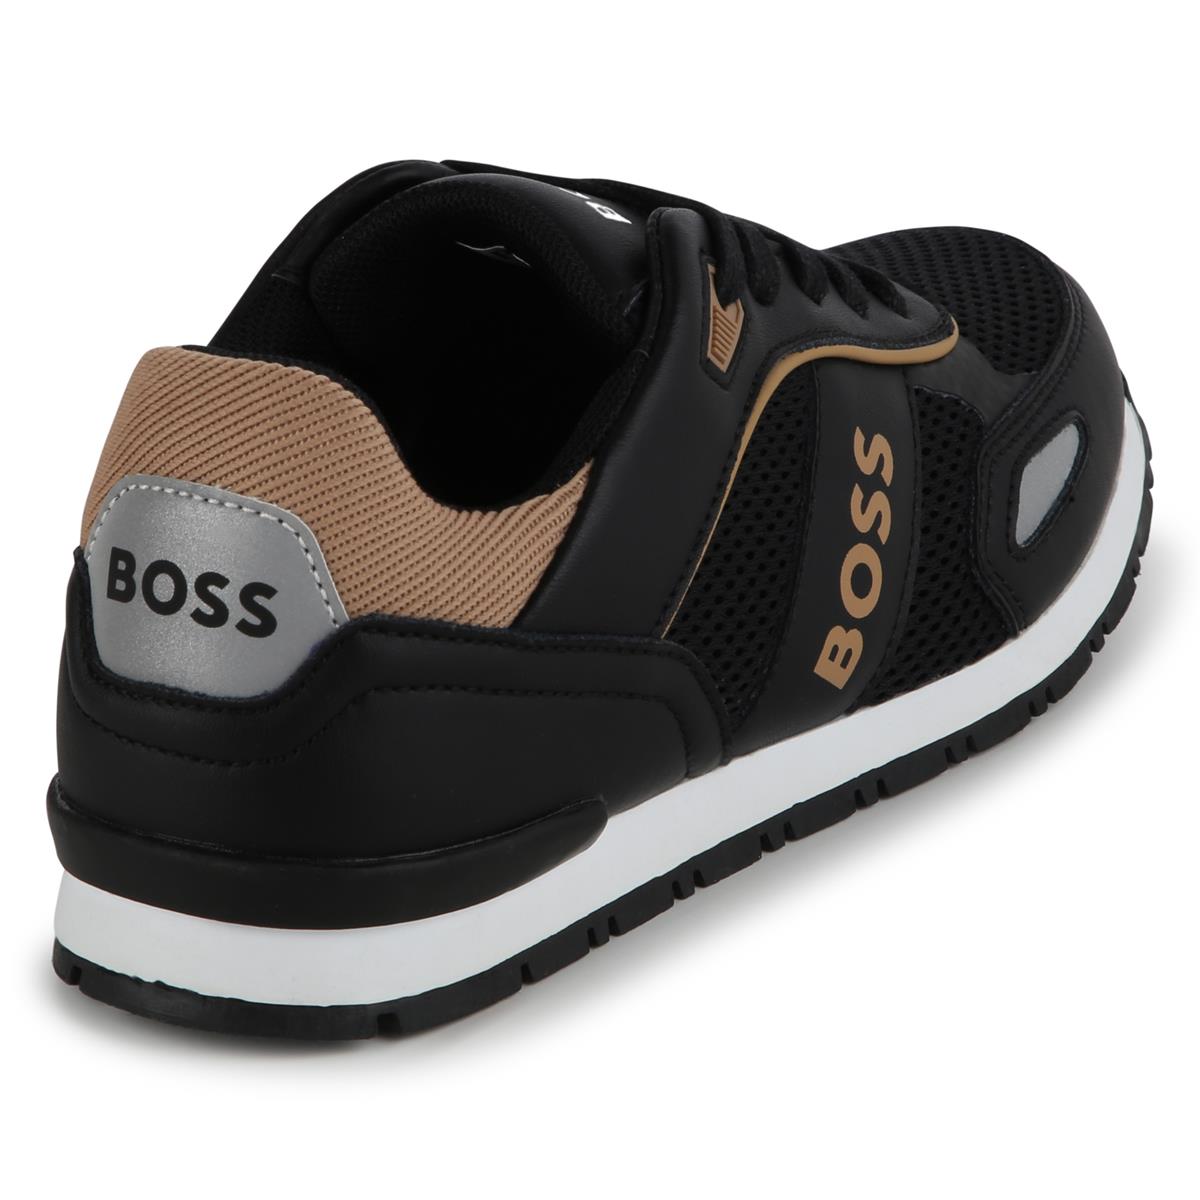 Boys Black Shoes